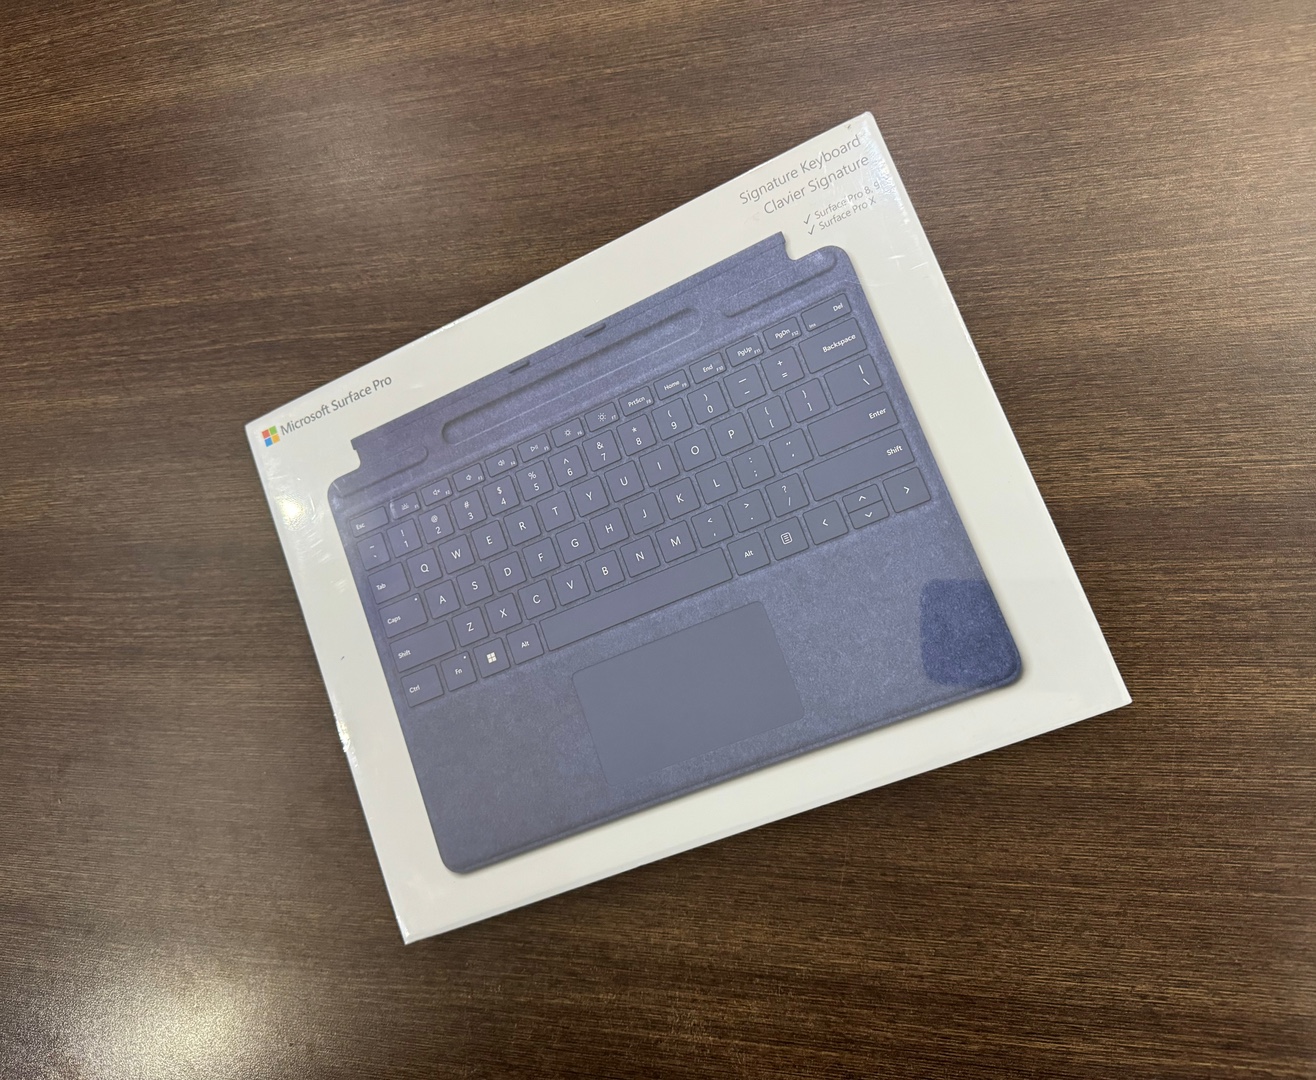 accesorios para electronica - Teclado Signature Microsoft Surface Pro Nuevo Sellado, RD$ 13,500 NEG 0